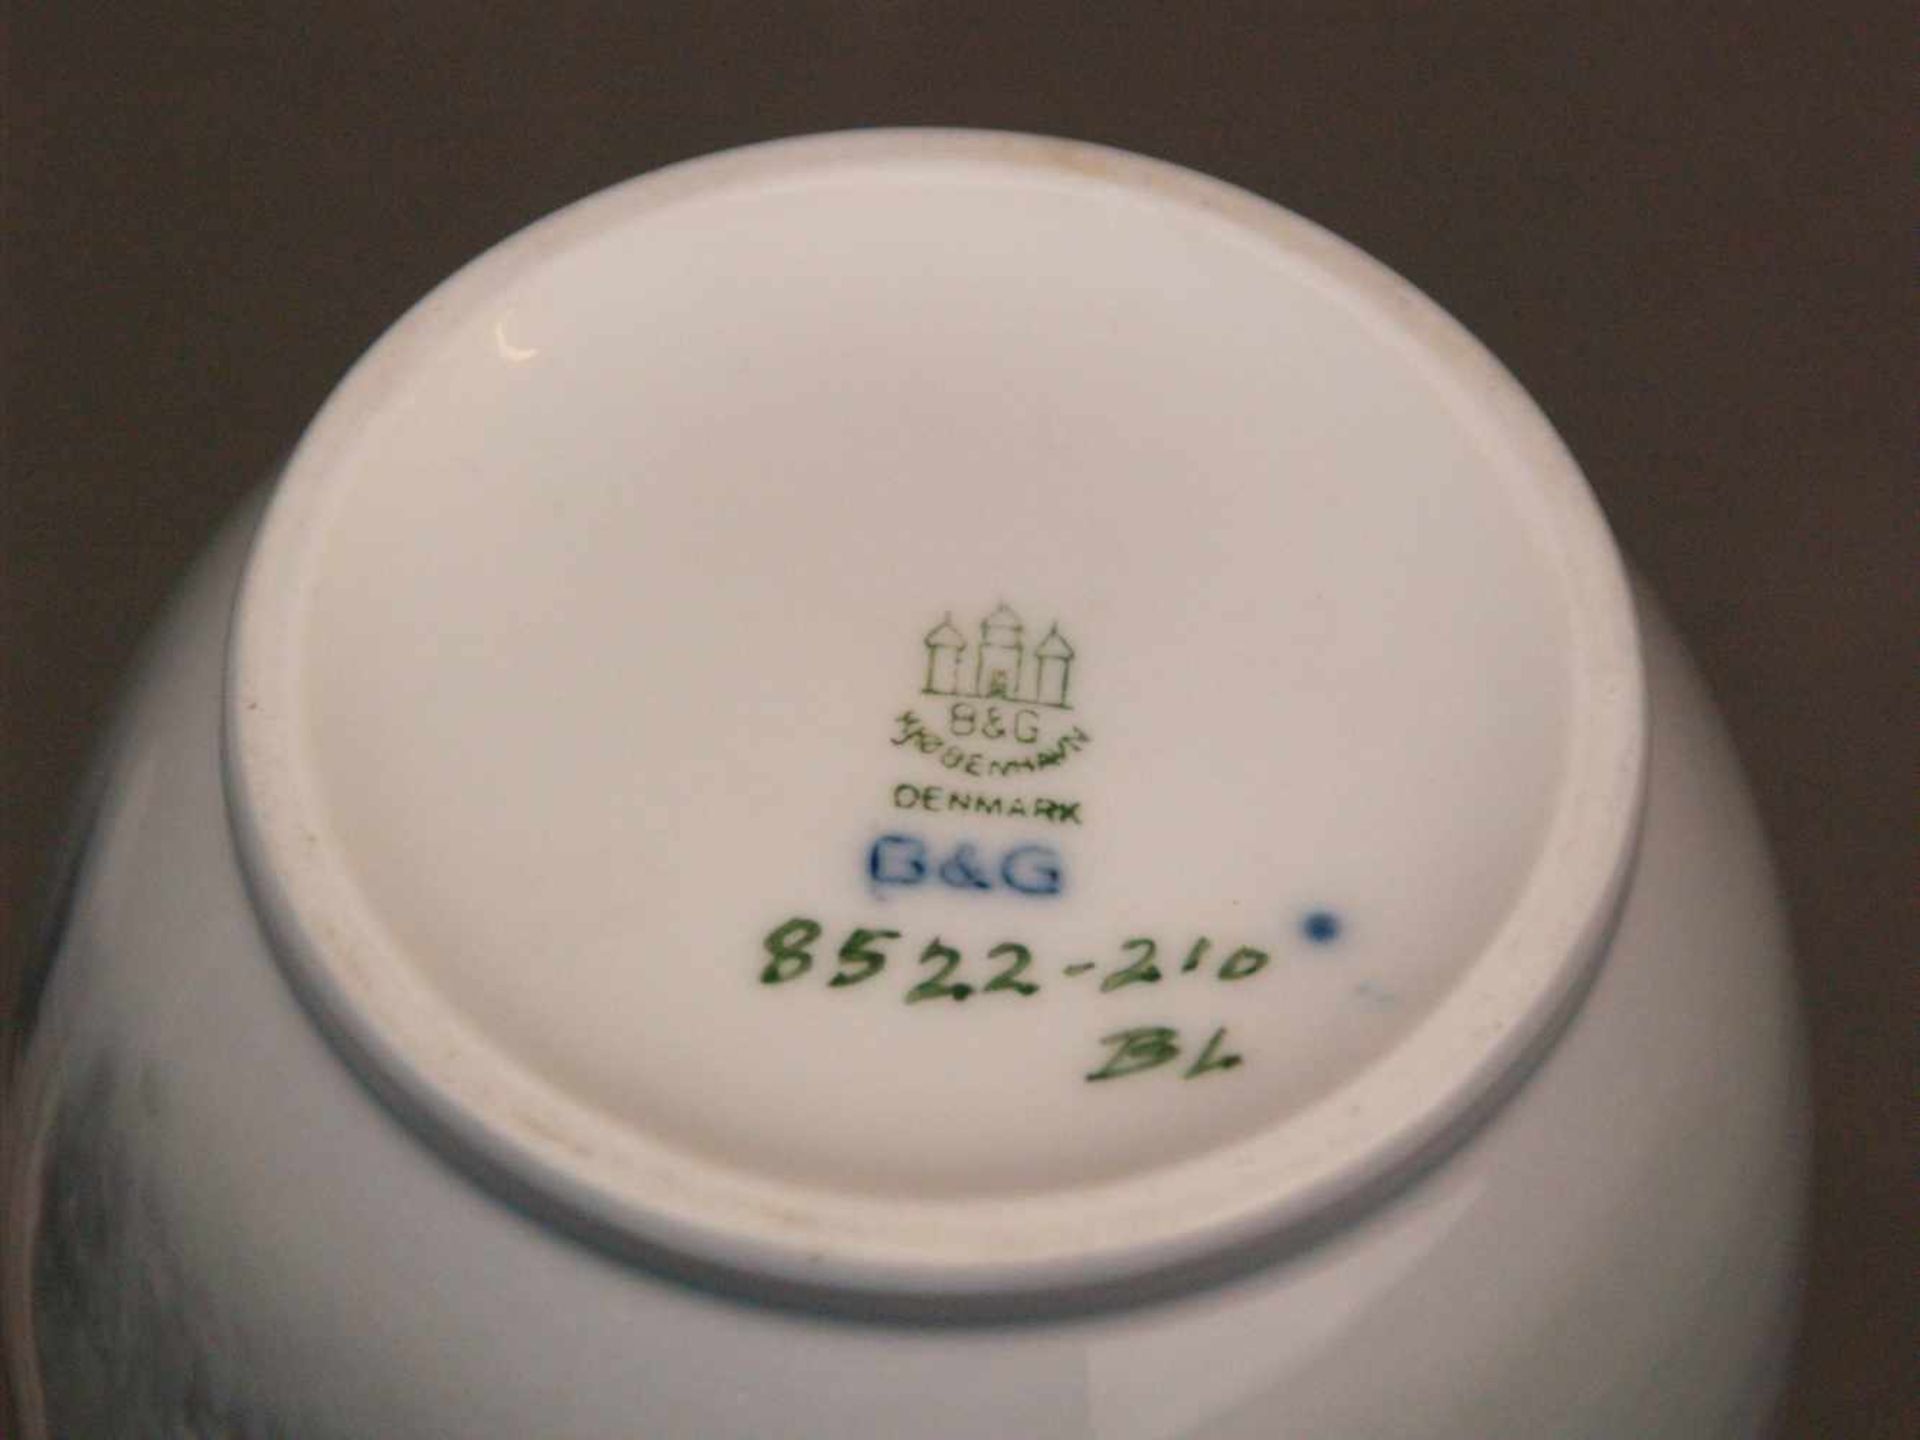 Konvolut Bing & Gröndahl - Royal Copenhagen, 4-tlg.: 1 Vase, Boden mit Pinselnummer "8522-210 BL", - Bild 3 aus 8